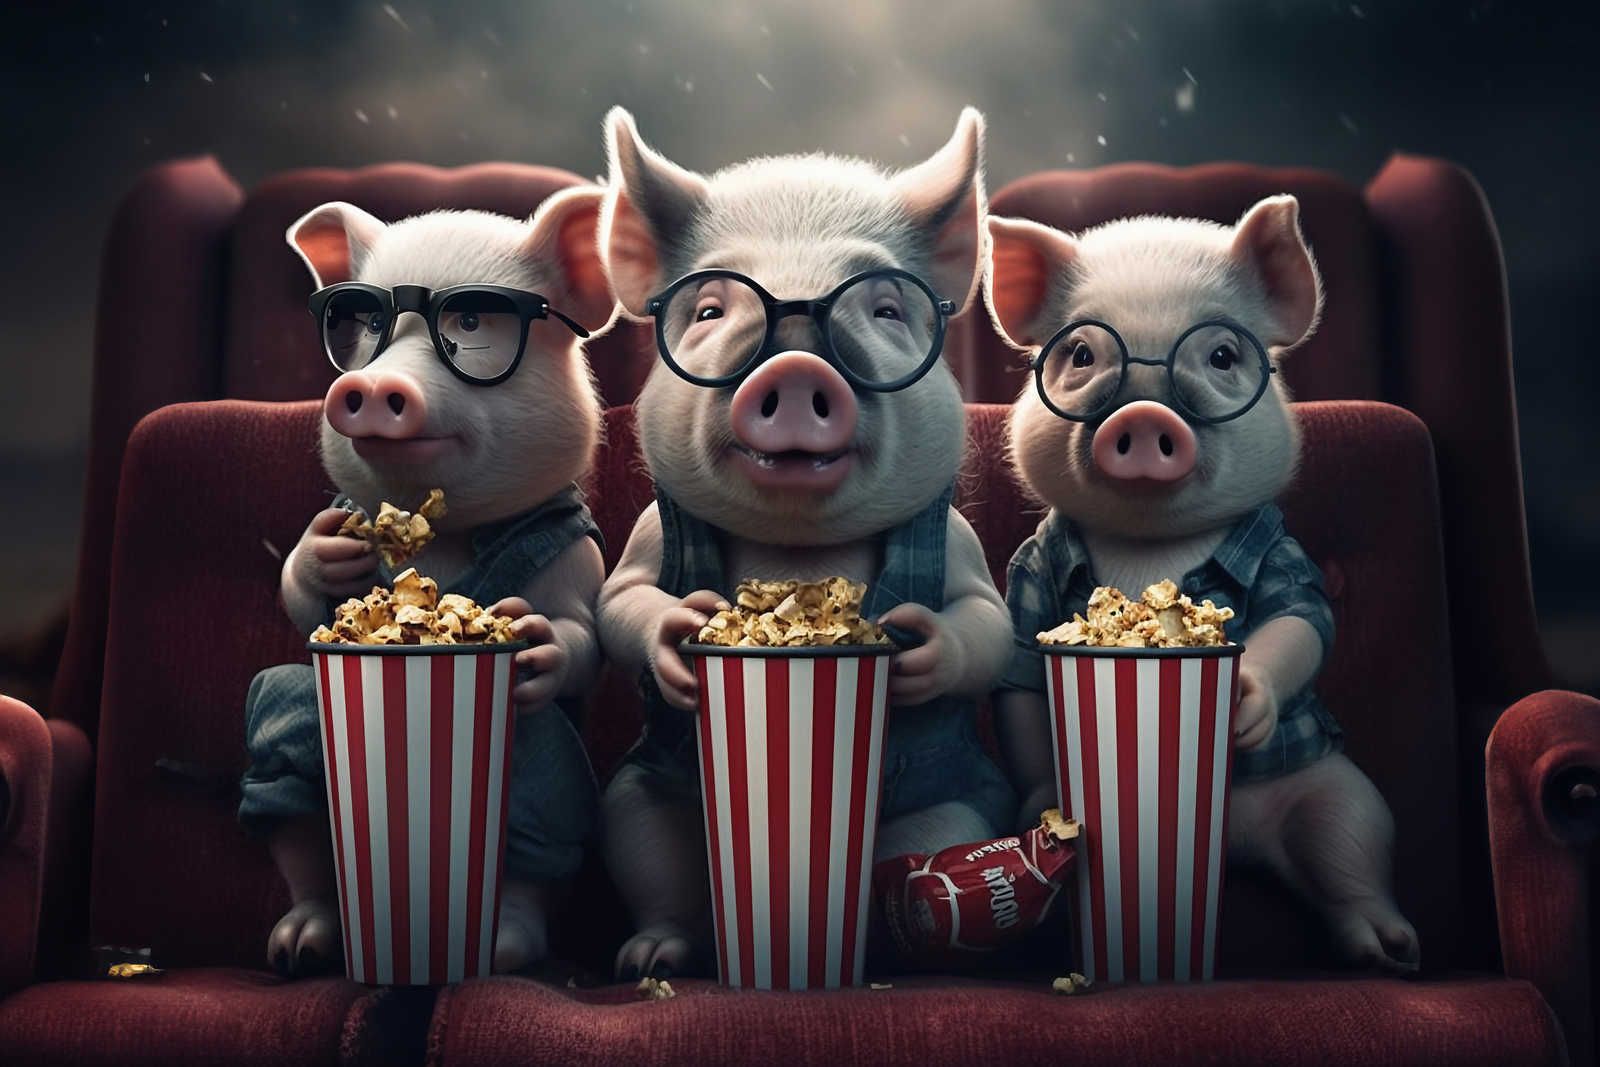             KI-Leinwandbild »popcorn pigs« – 90 cm x 60 cm
        